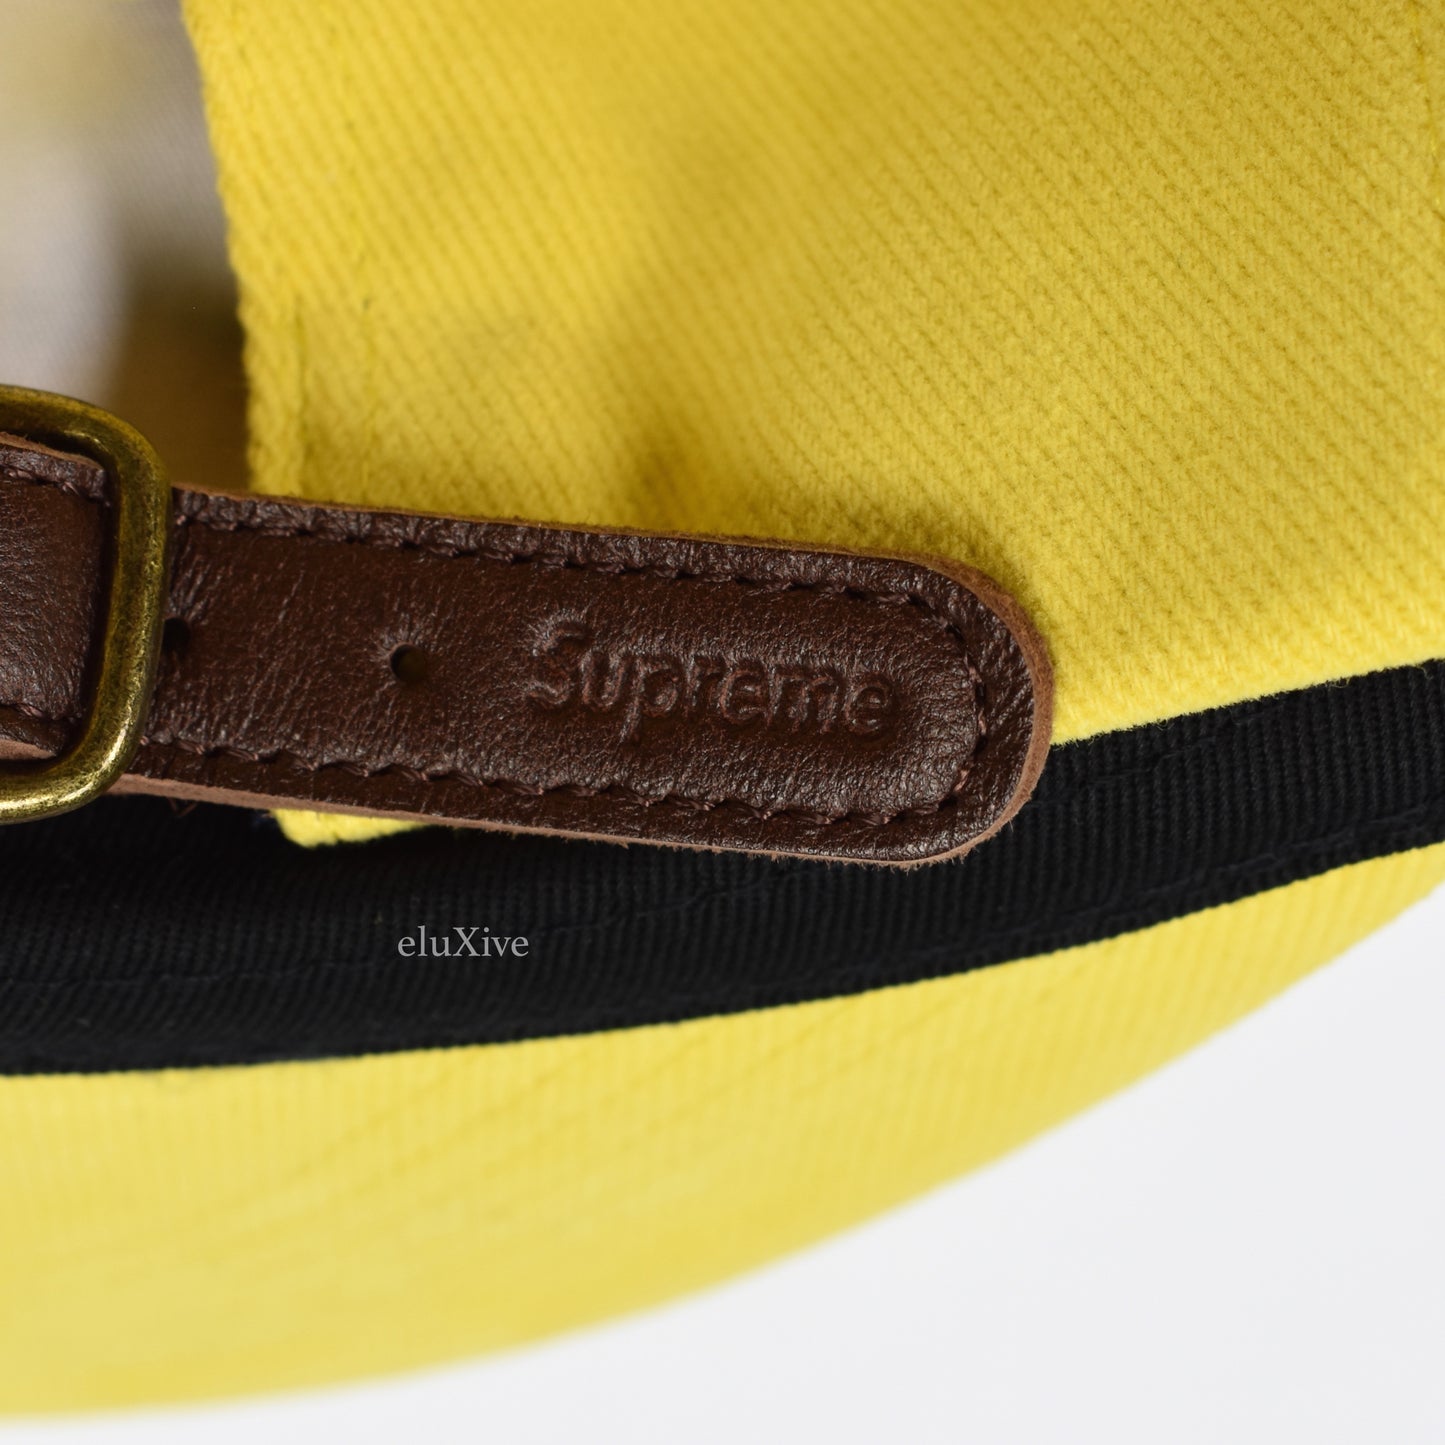 Supreme - Yellow Classic Logo Hat